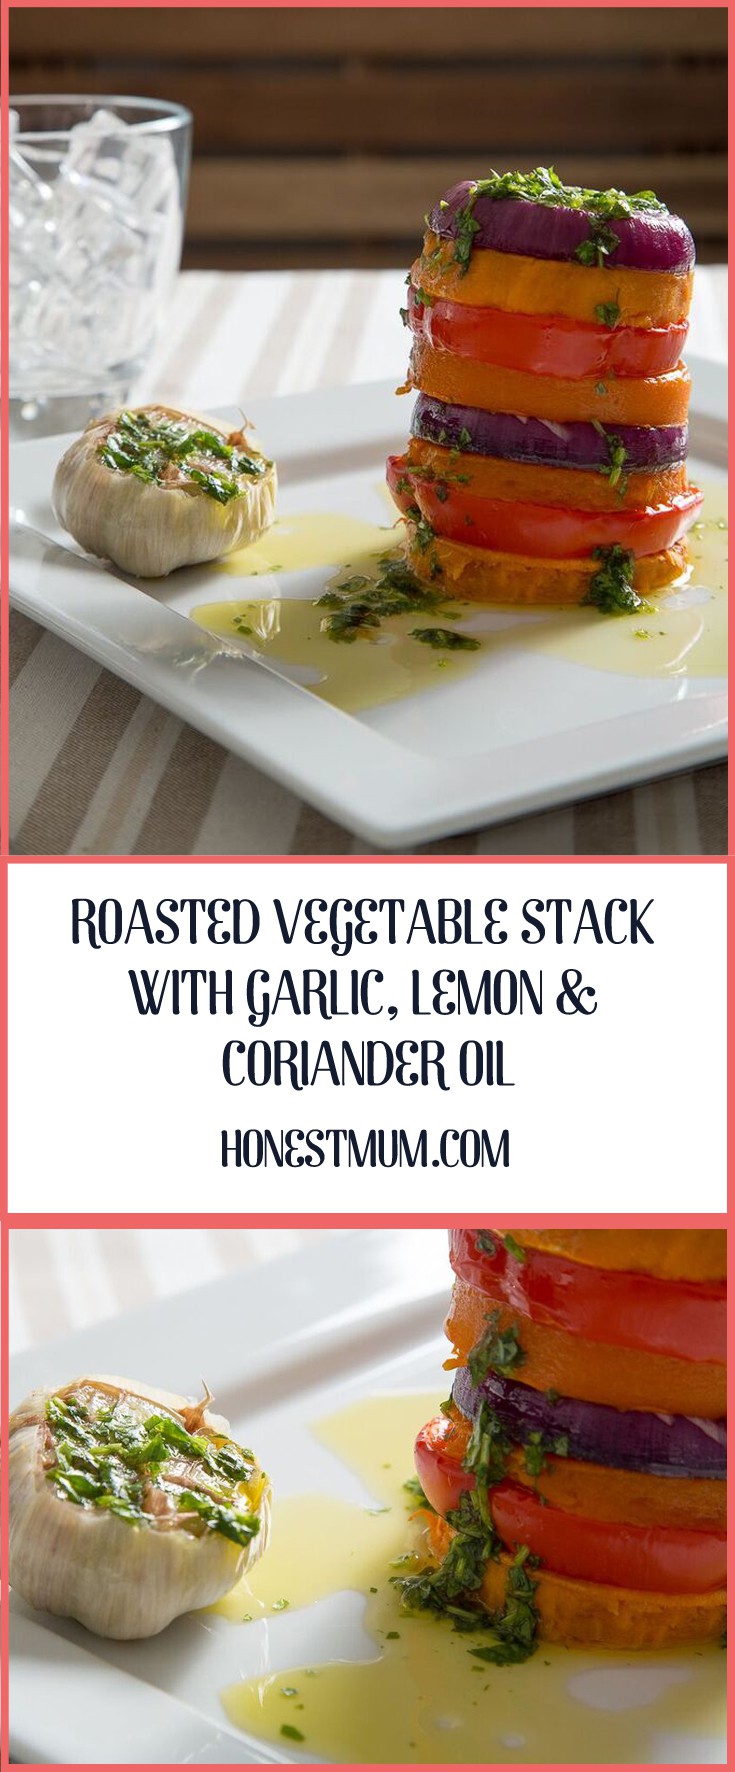 Roasted Vegetable Stack with Garlic, Lemon & Coriander Oil